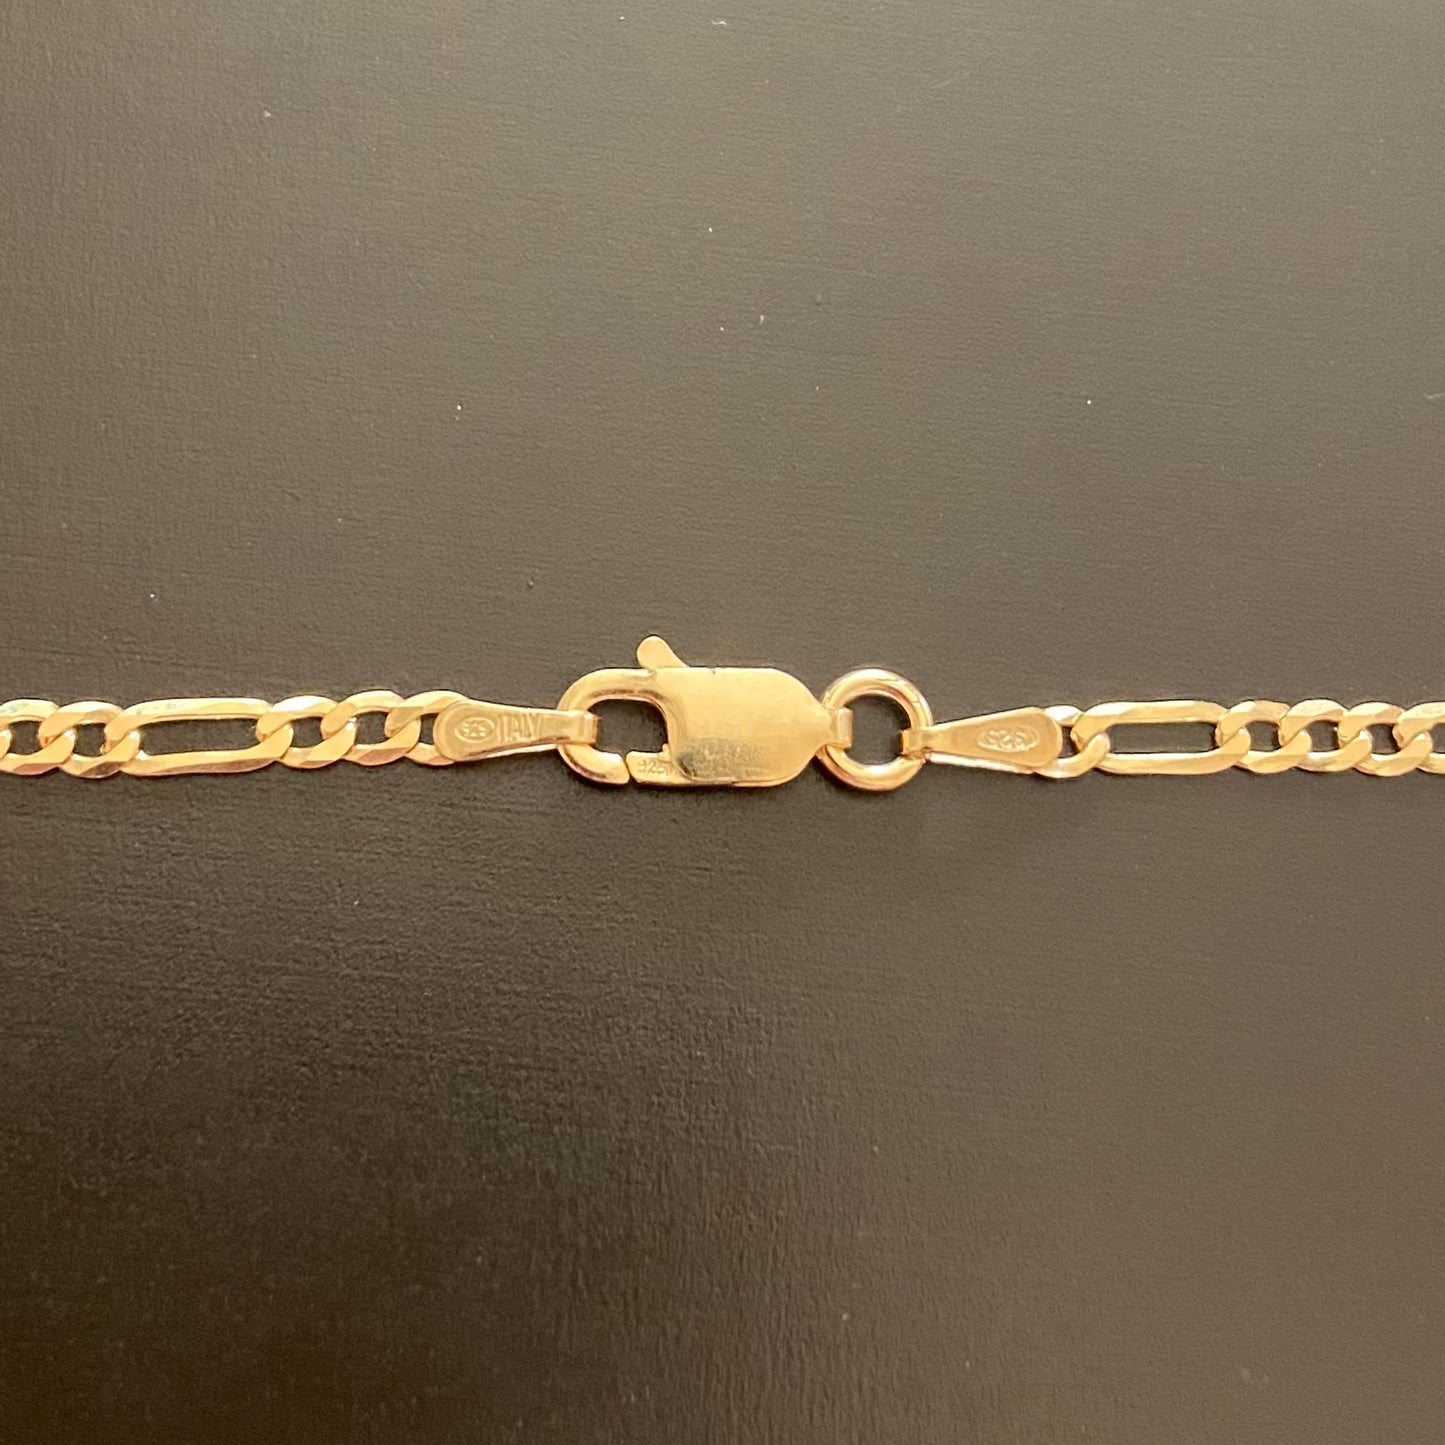 14k Gold Vermeil Figaro Chain 18in 2mm